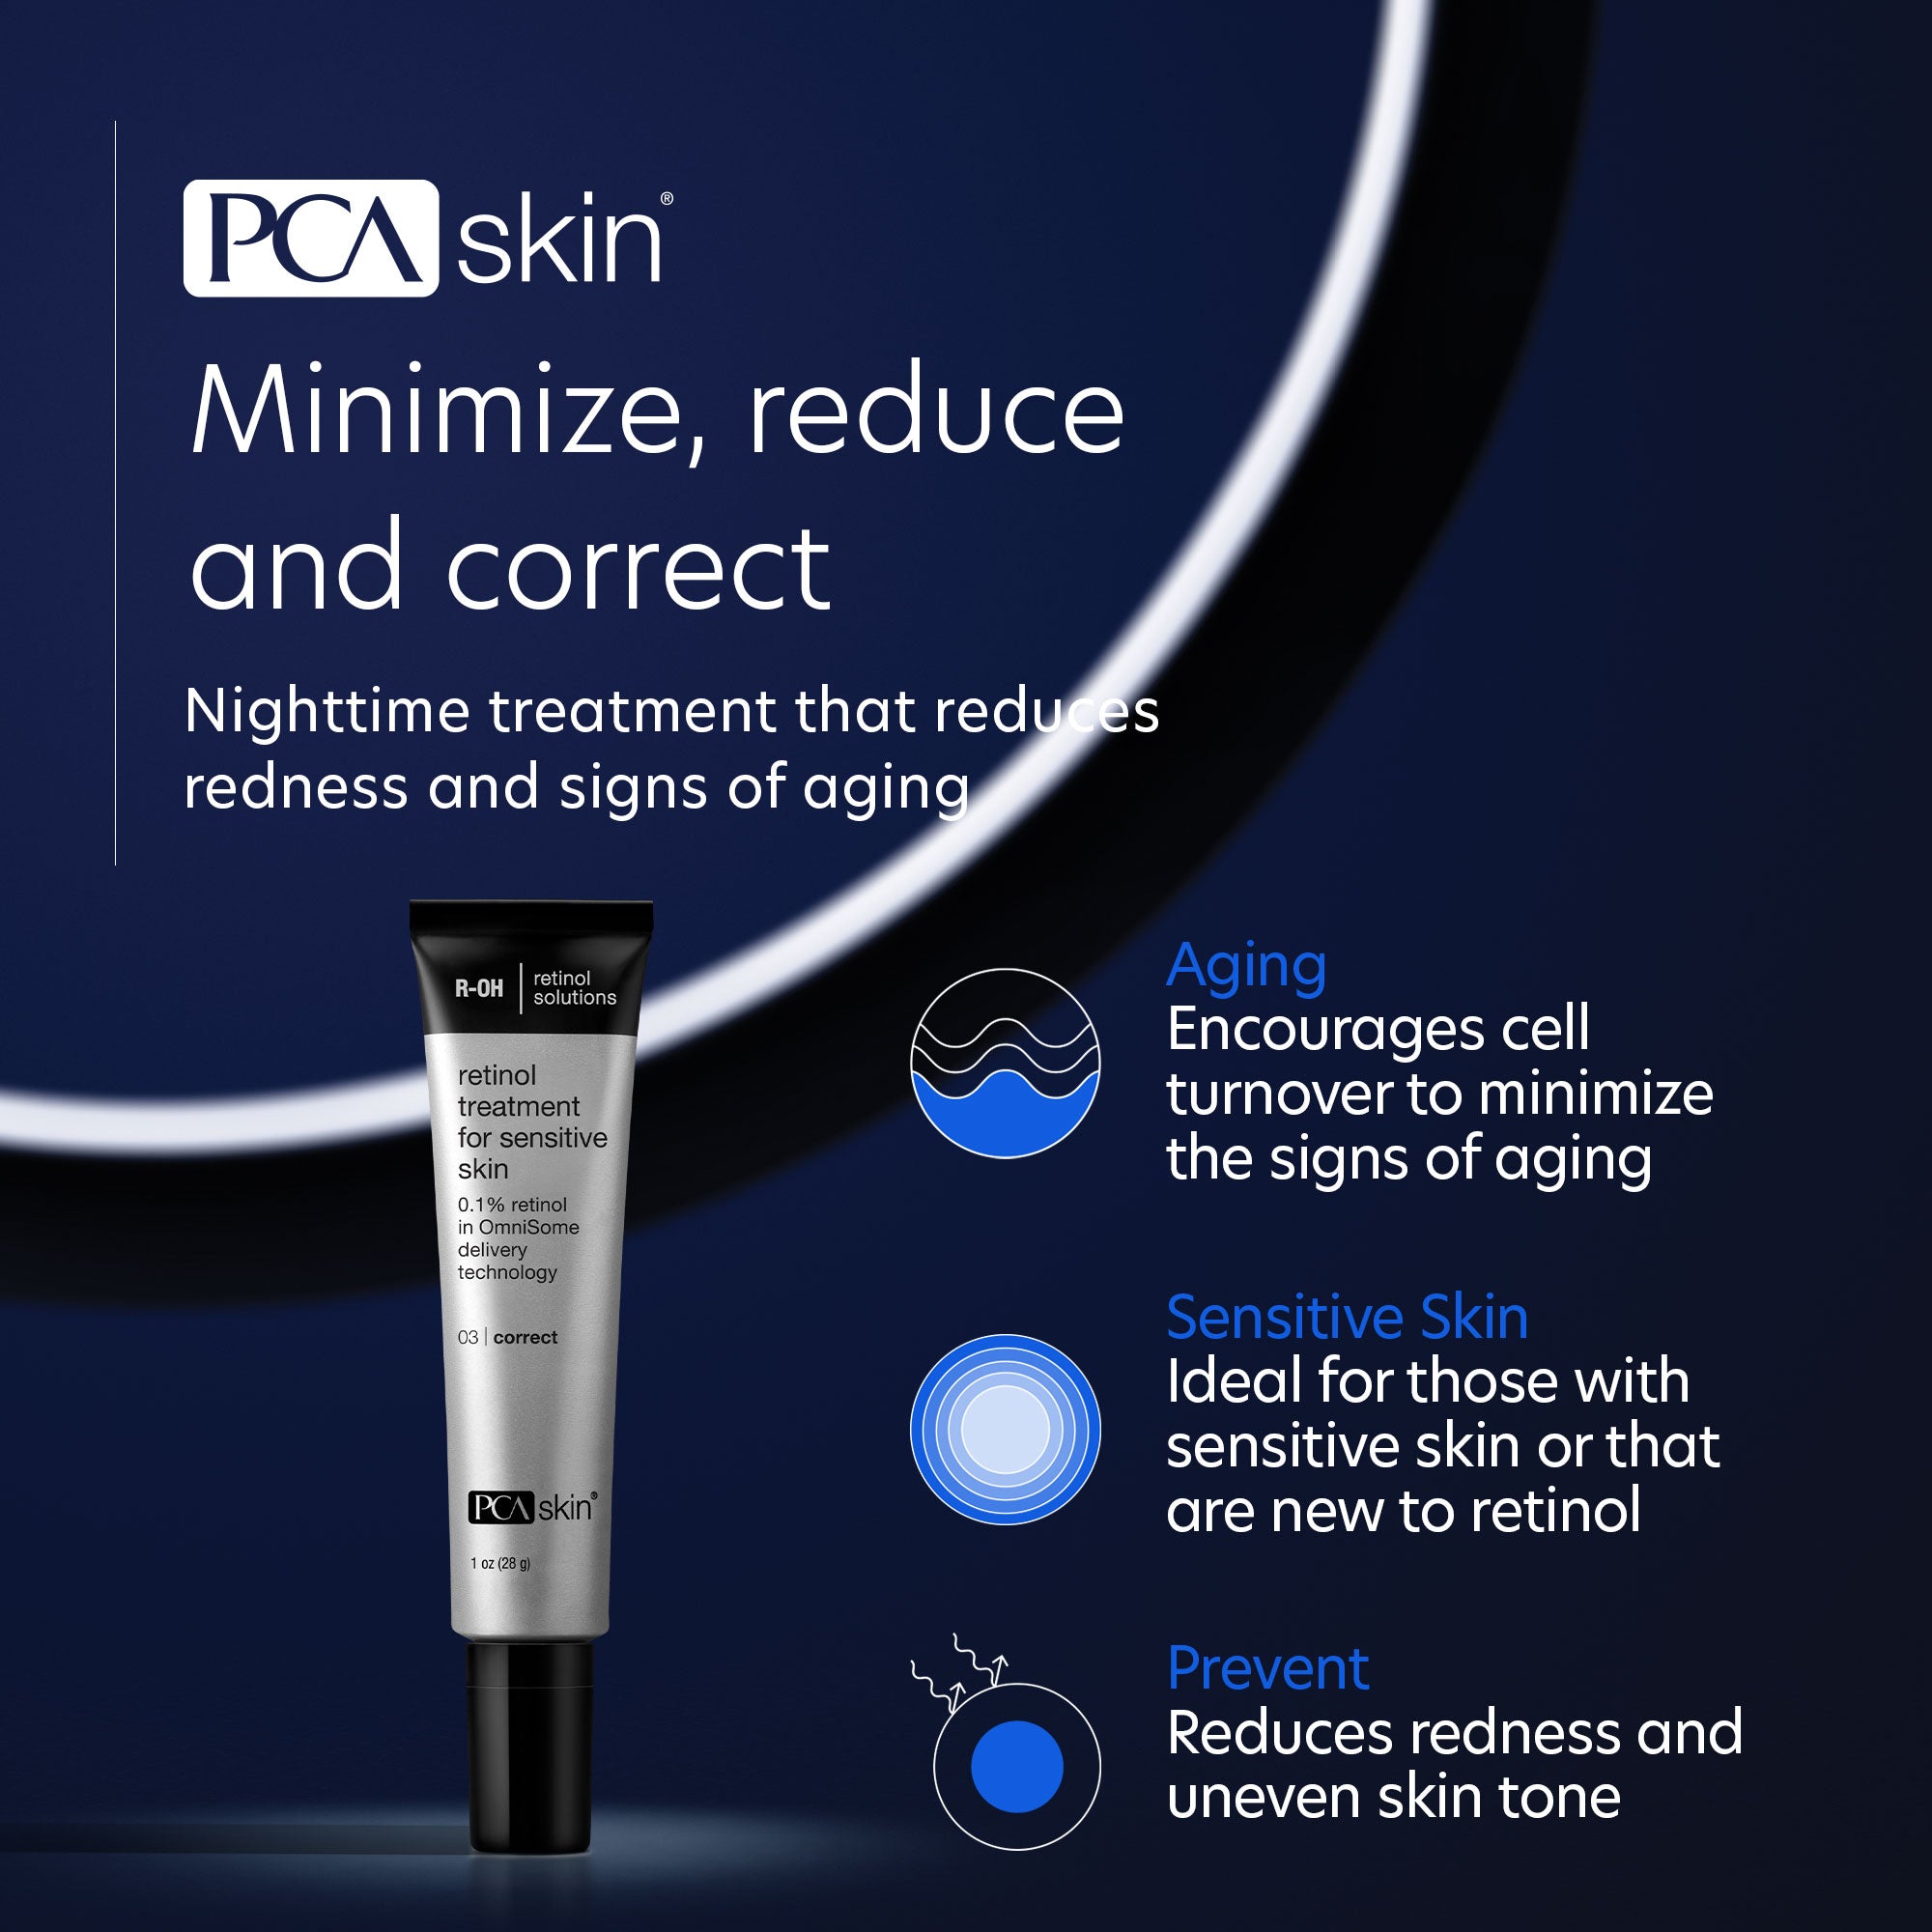 PCA Skin Retinol Treatment for Sensitive Skin (1 oz)